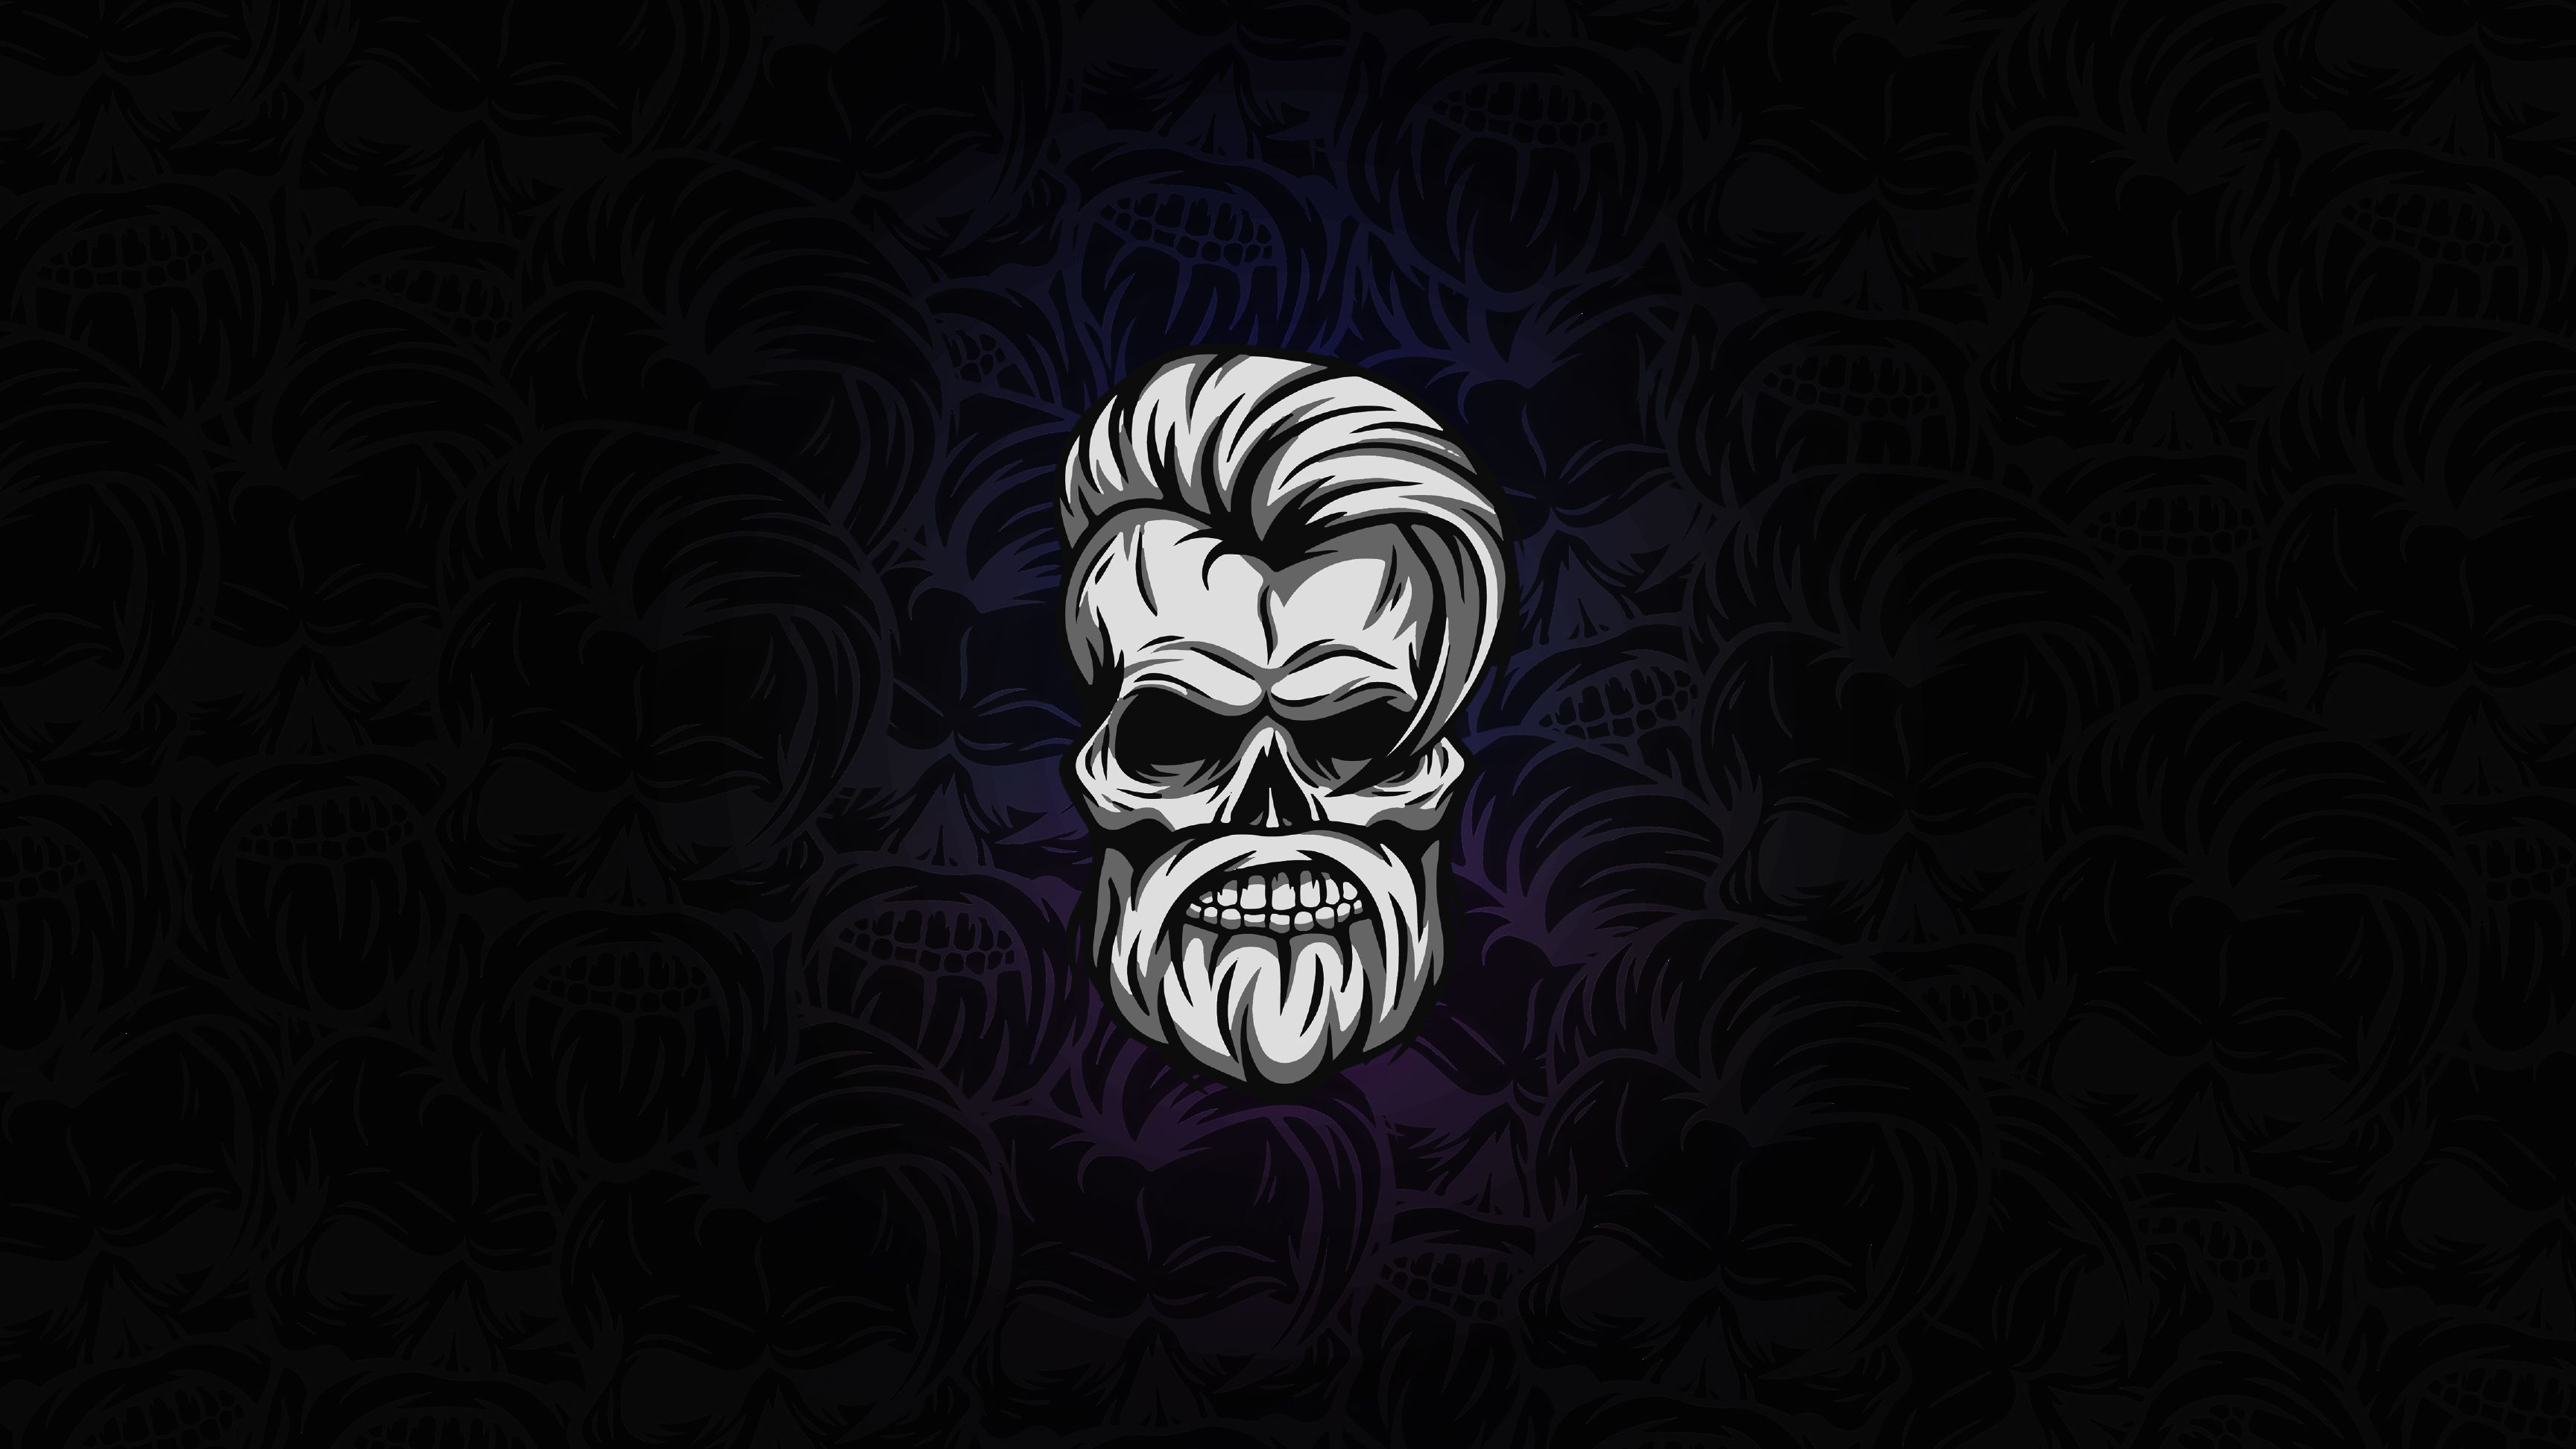 Beard Skull Dark 4k, HD Artist, 4k Wallpaper, Image, Background, Photo and Picture